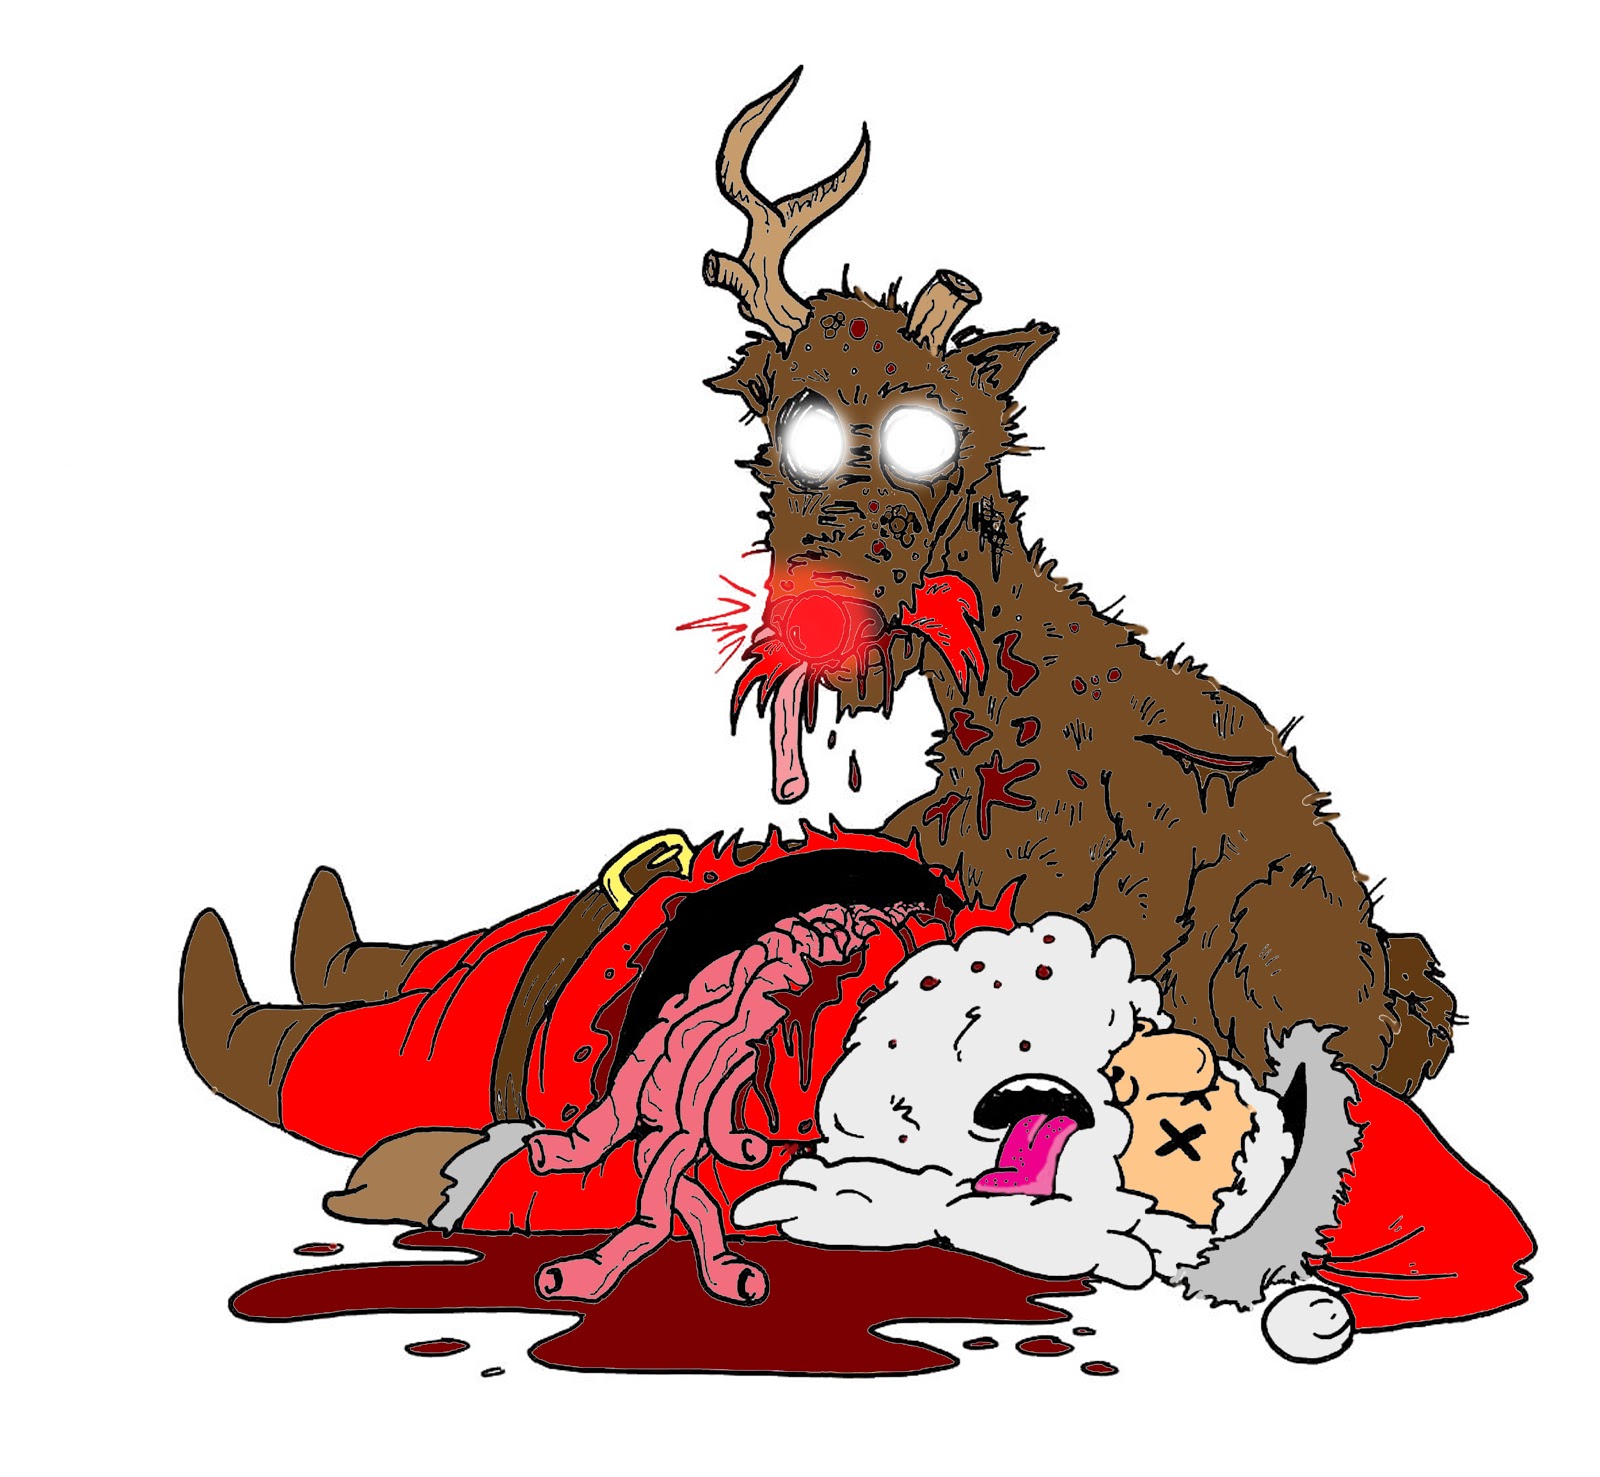 Sketch-A-Week: Zombie Rudolph